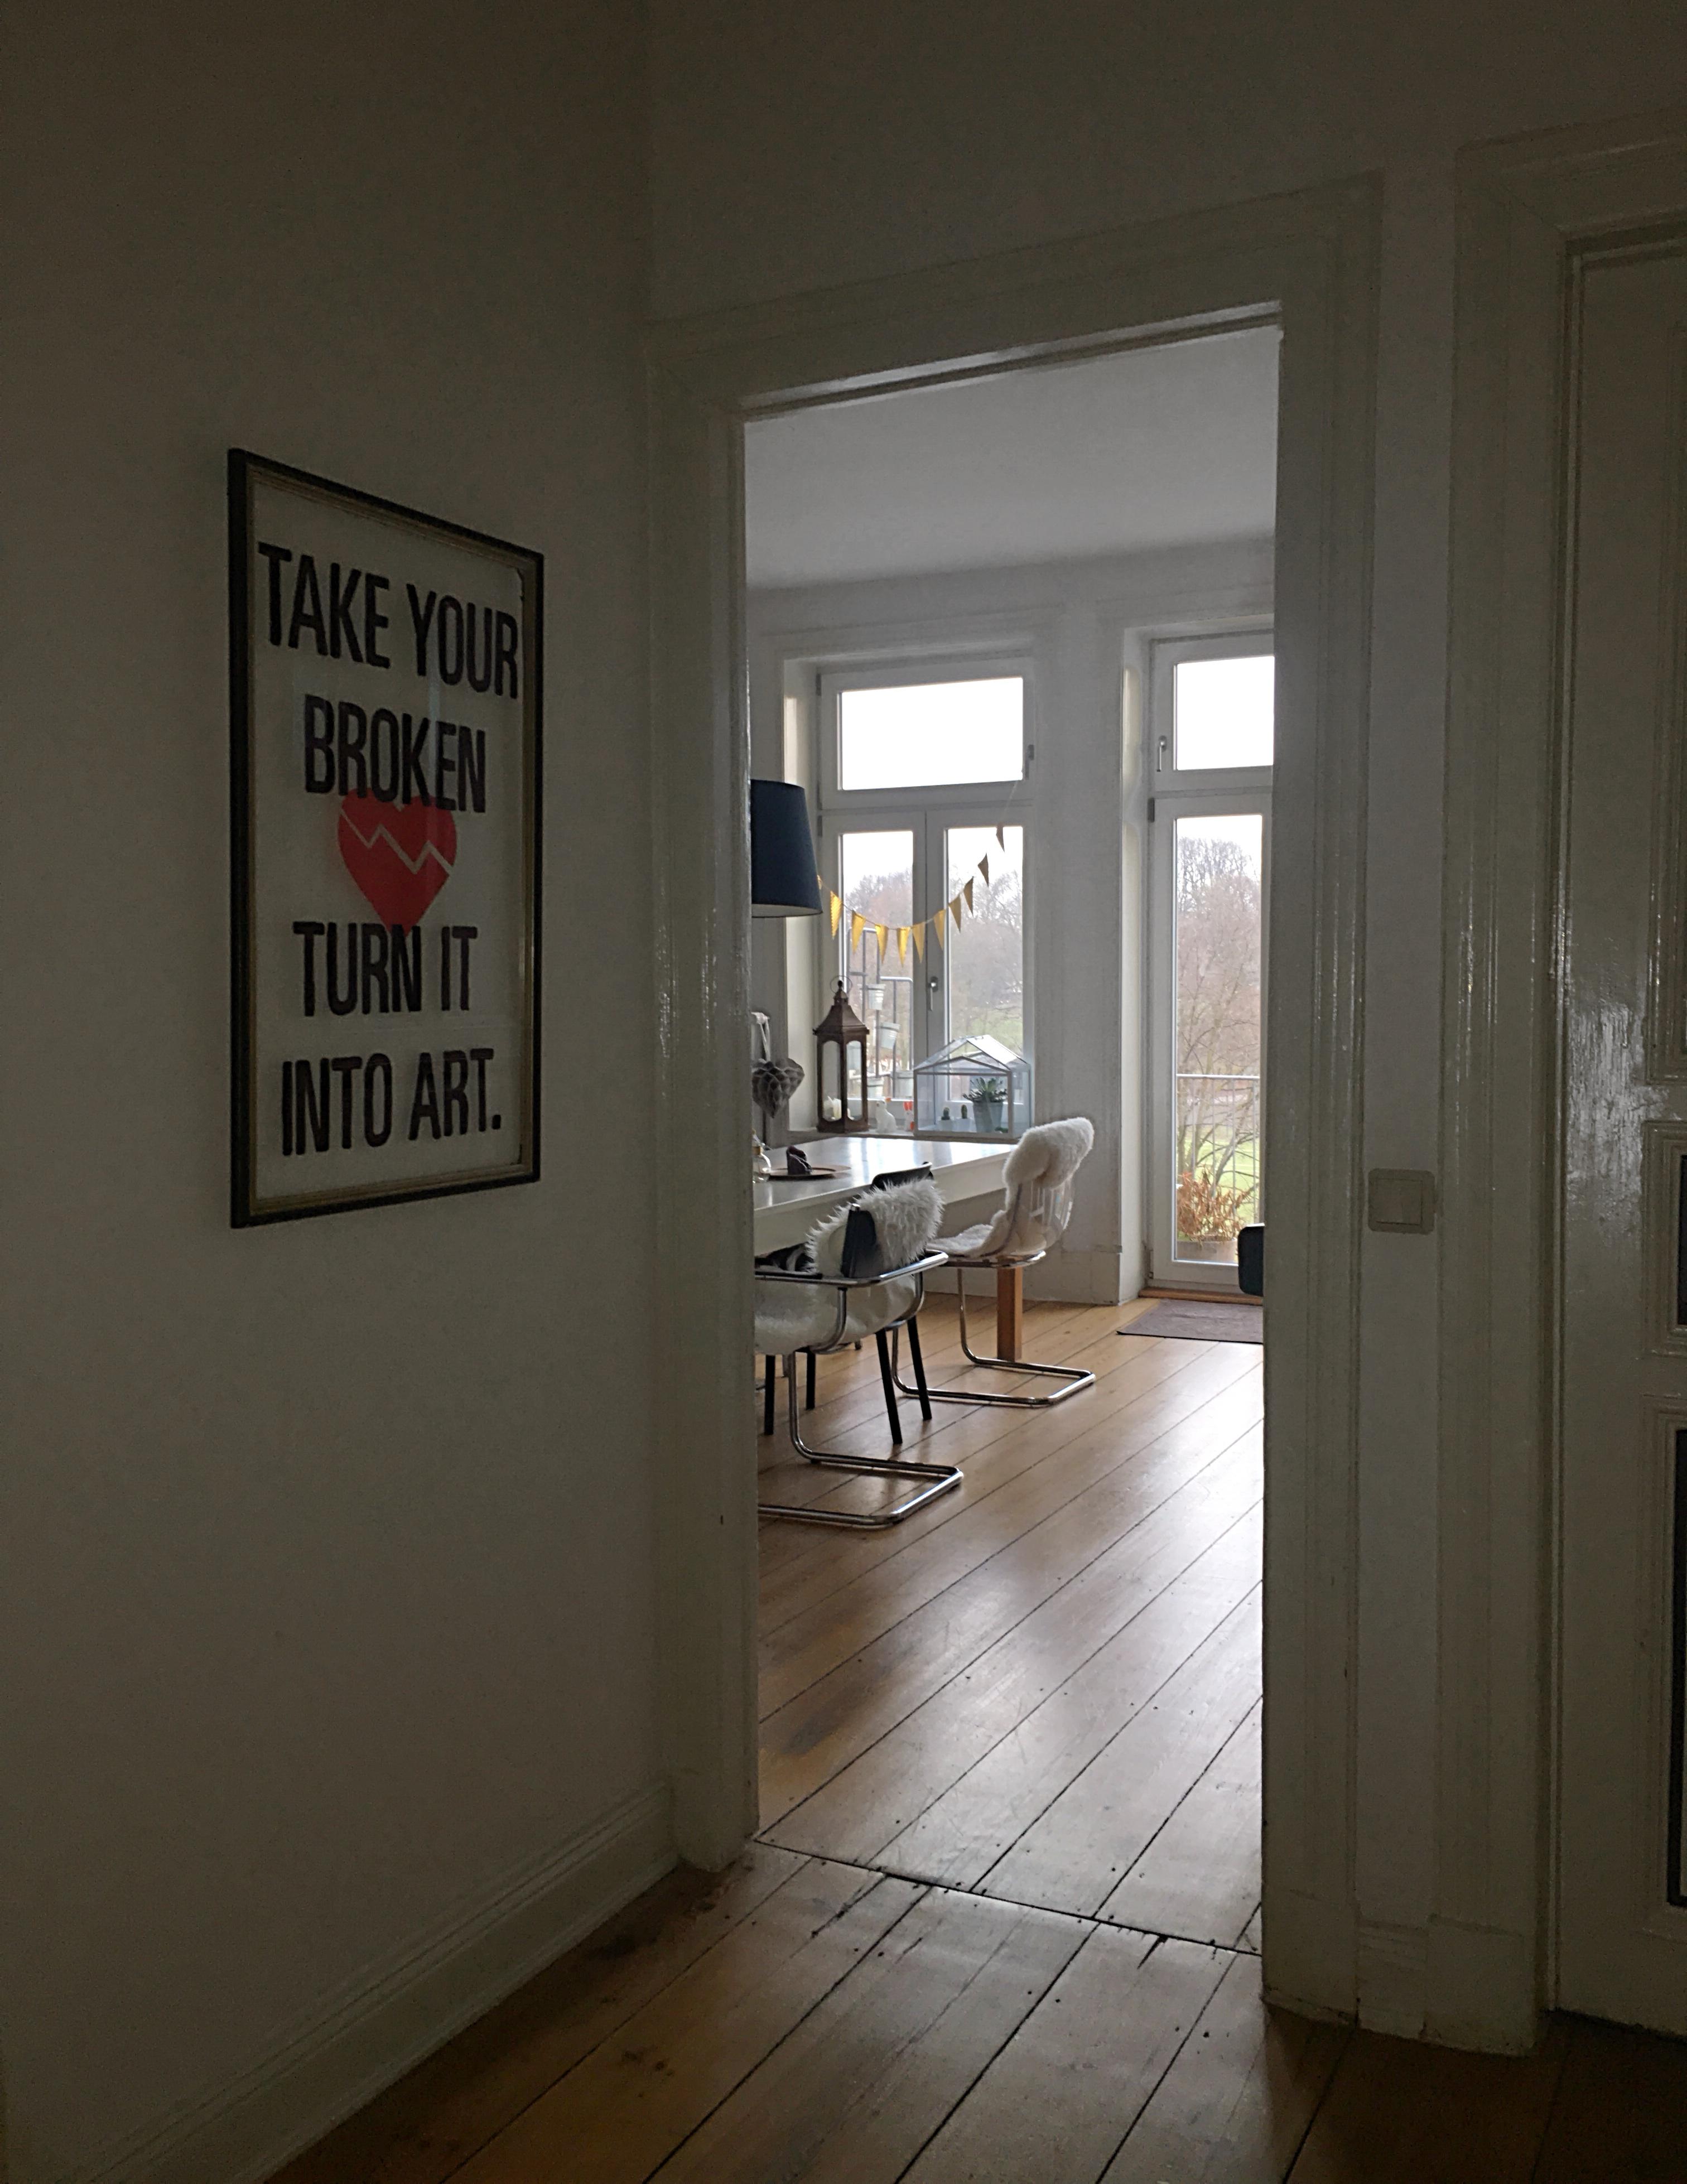 Home 2| #living #altbau #altbauliebe #scandinavian #flur #art #bild #livingroom